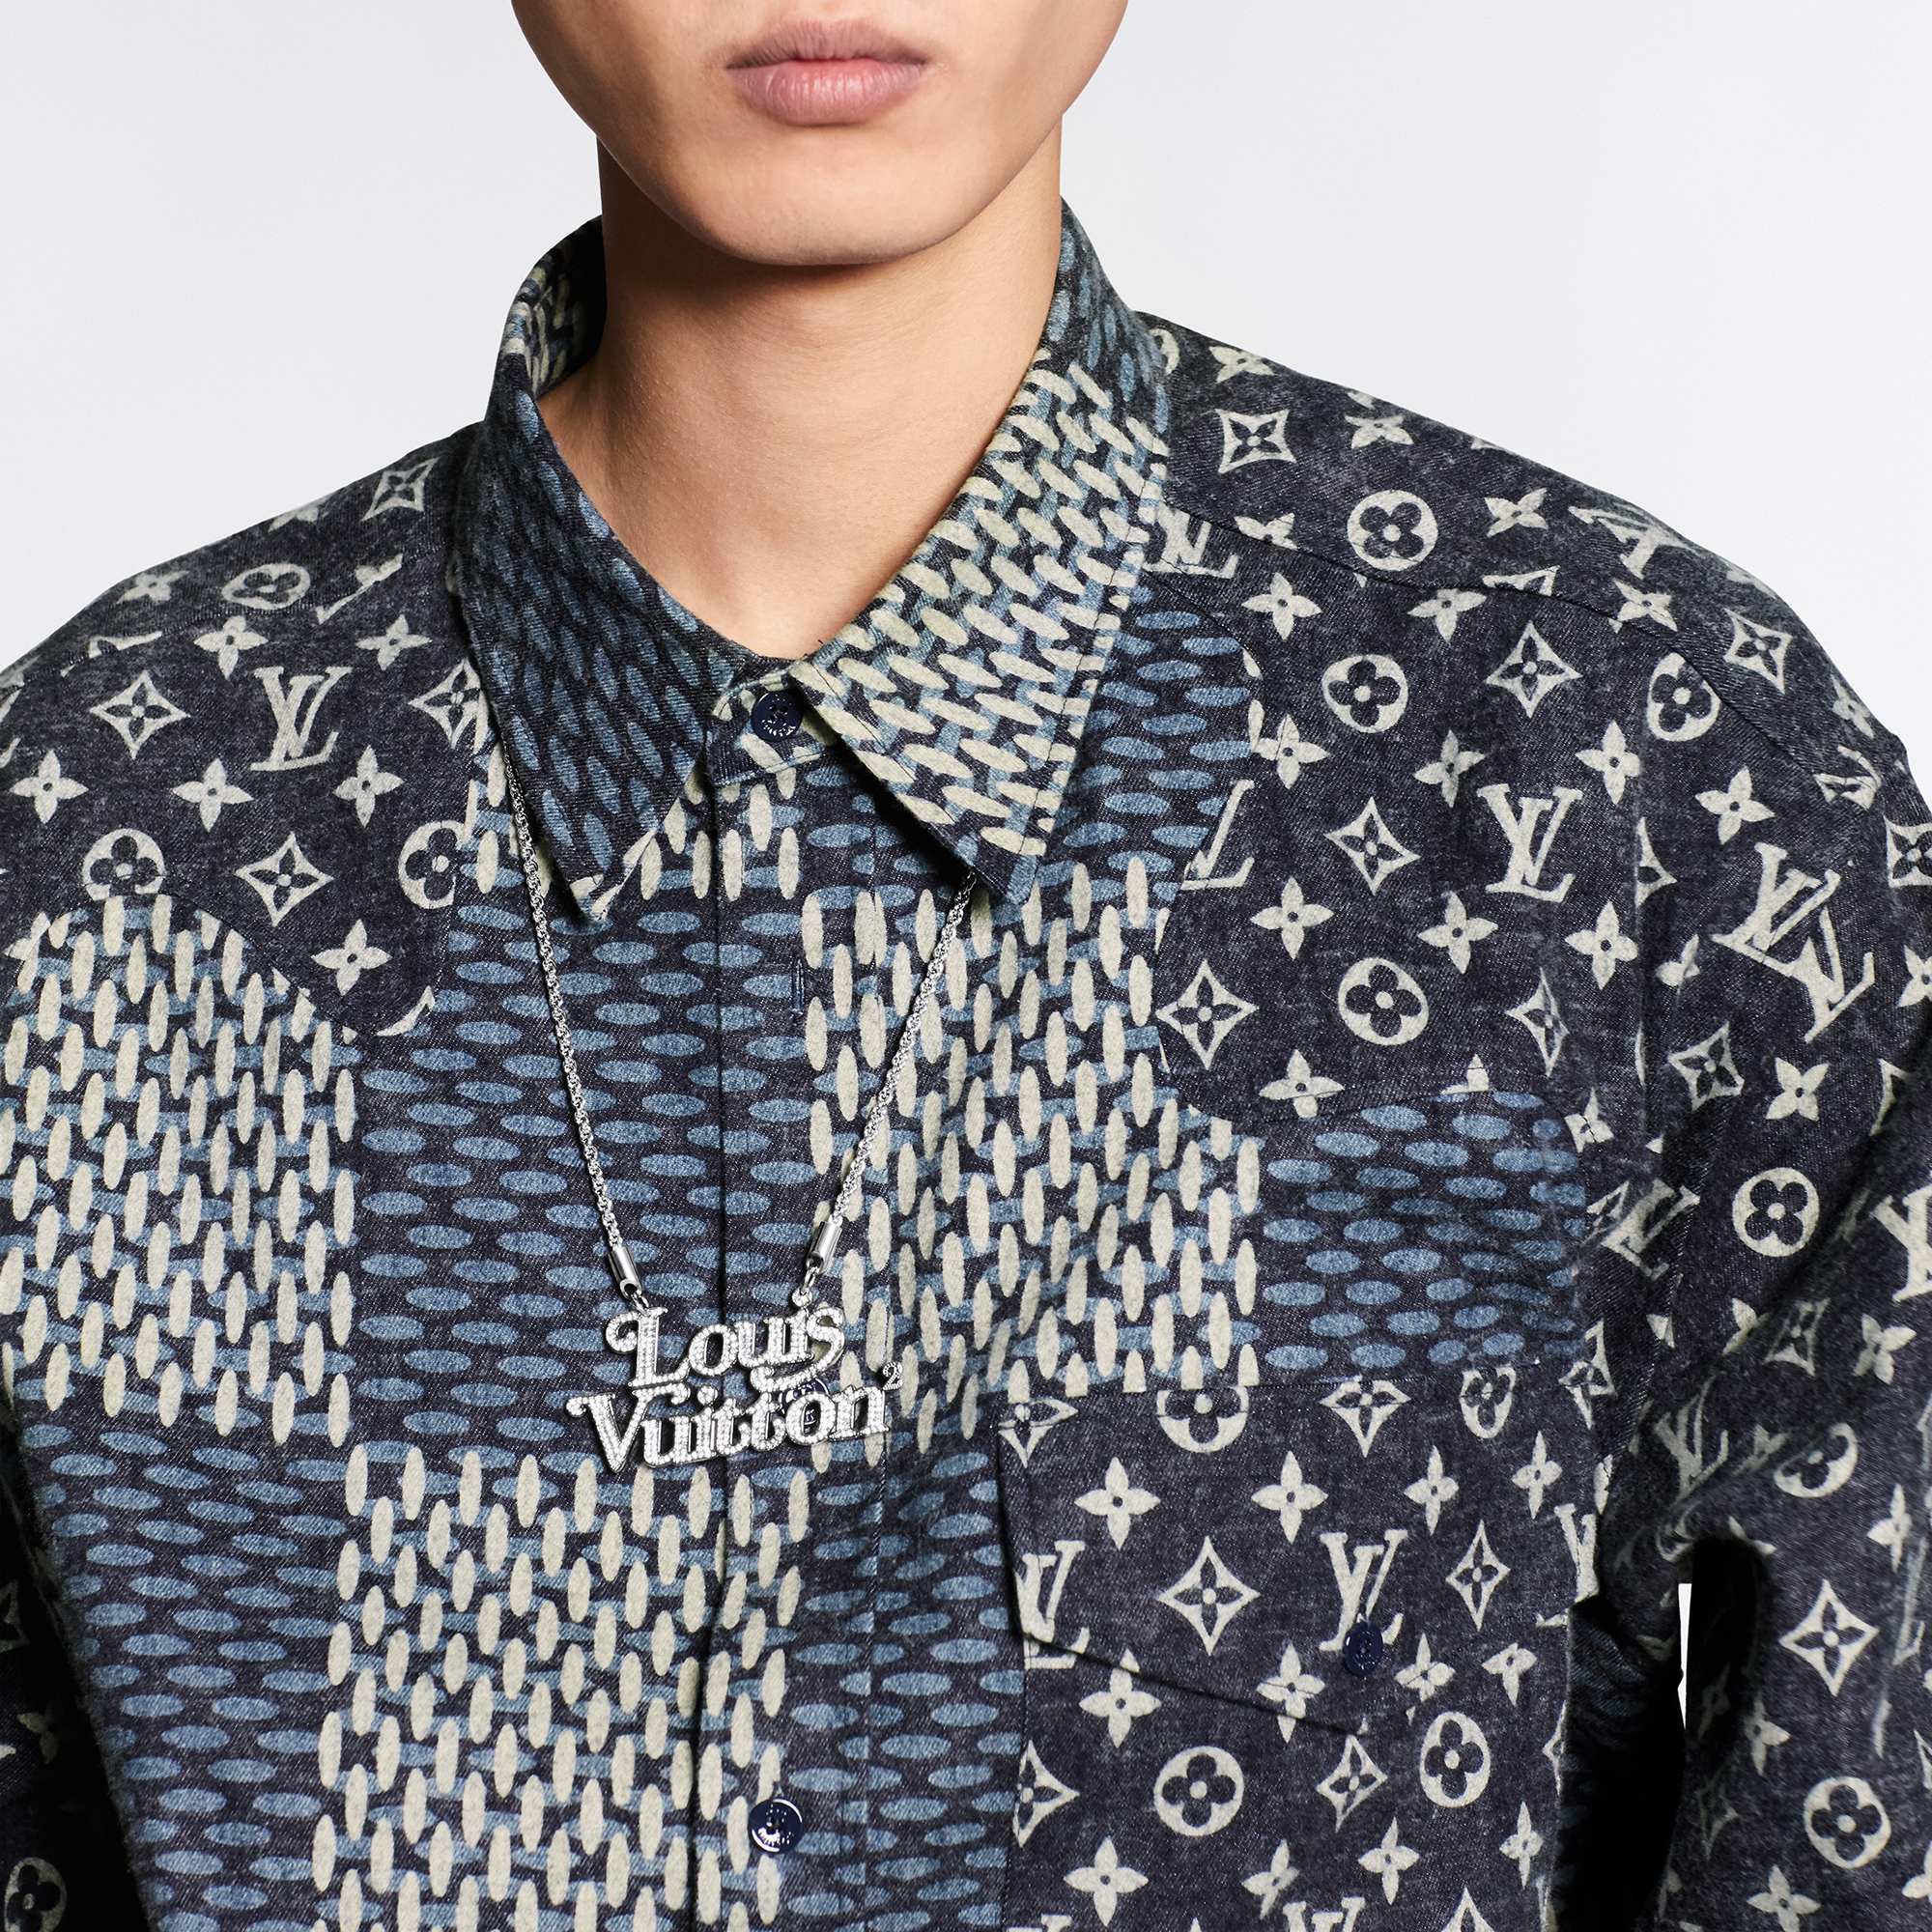 Louis Vuitton Teams Up With Nigo to Puts a Mod Twist on Streetwear